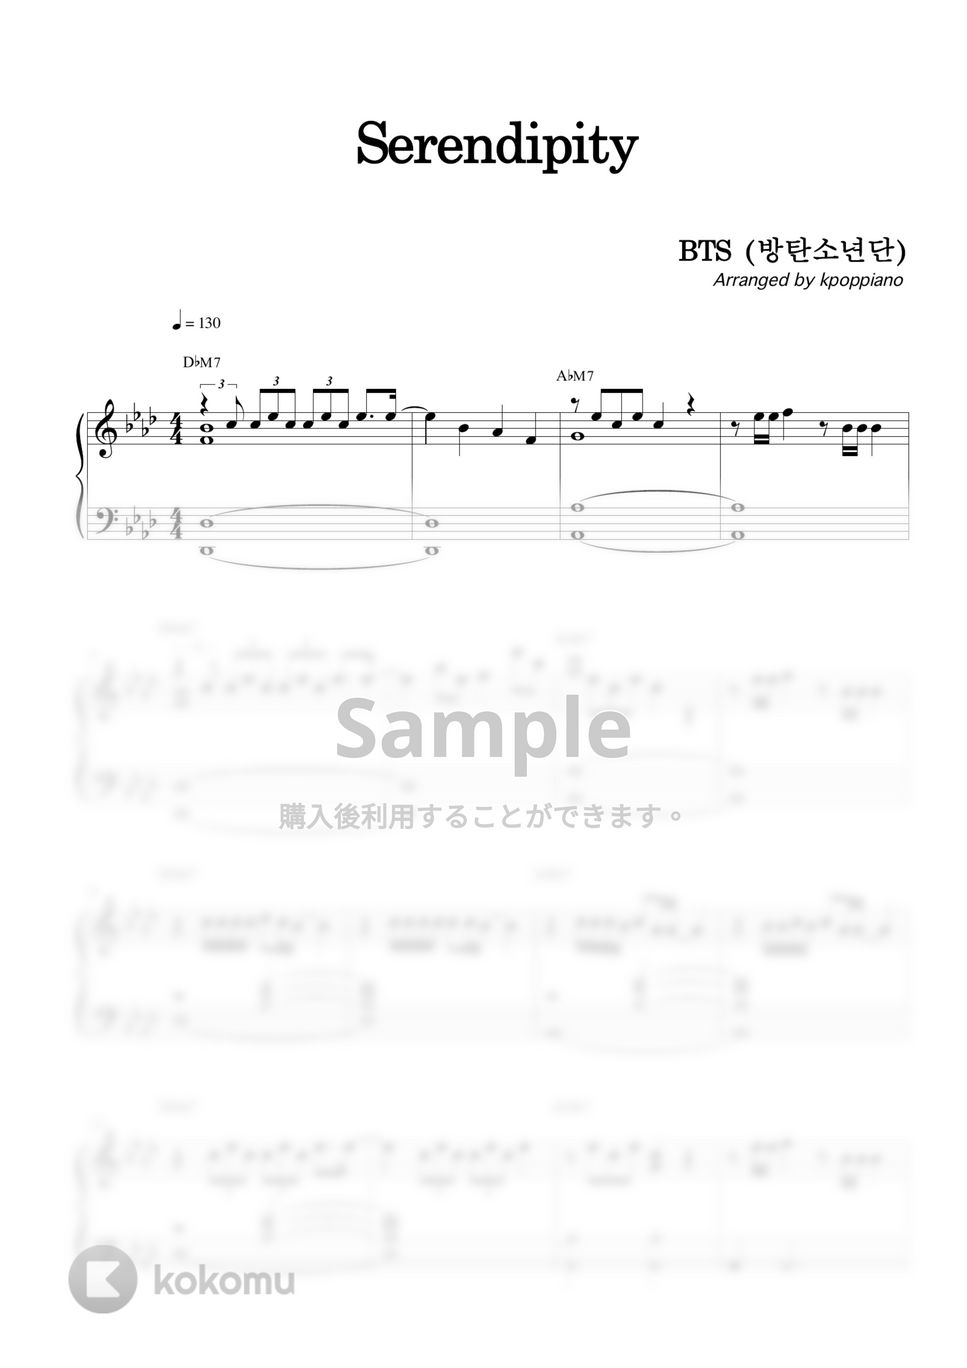 防弾少年団 (BTS) - Serendipity (JIMIN Solo) by KPOP PIANO